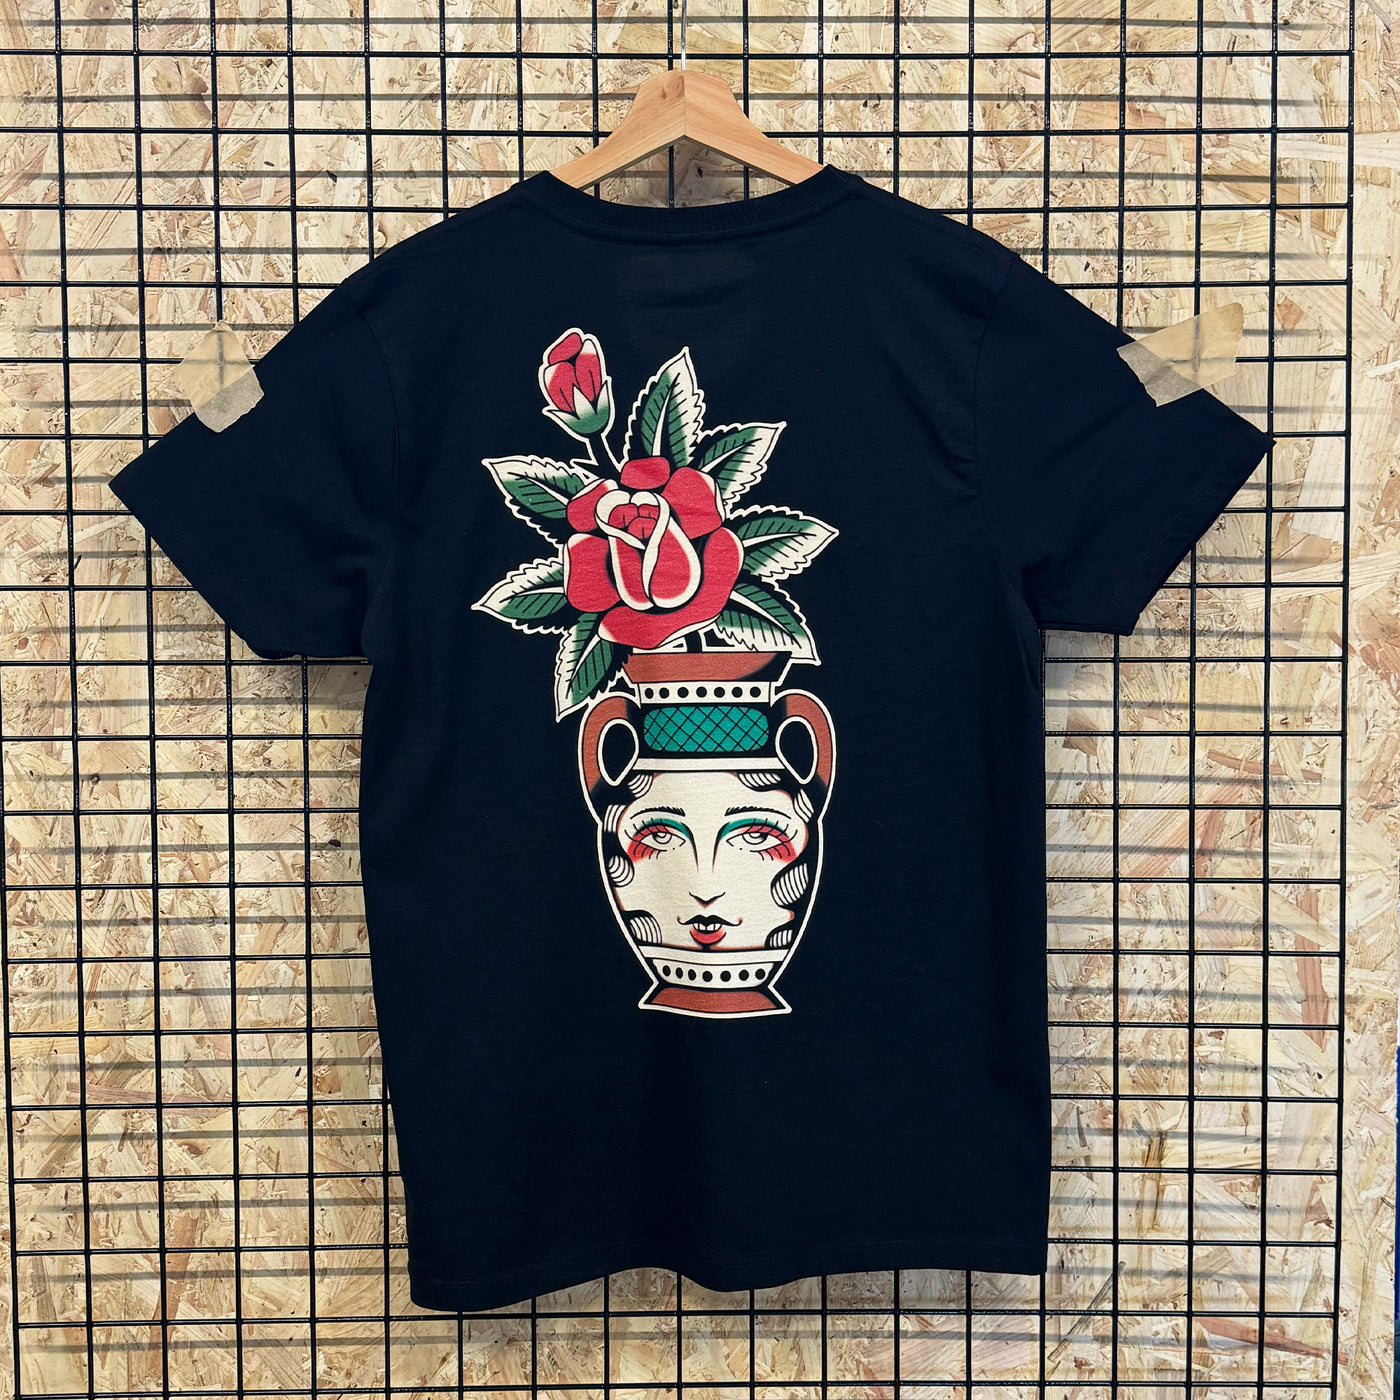 Painted Vase Black T-Shirt